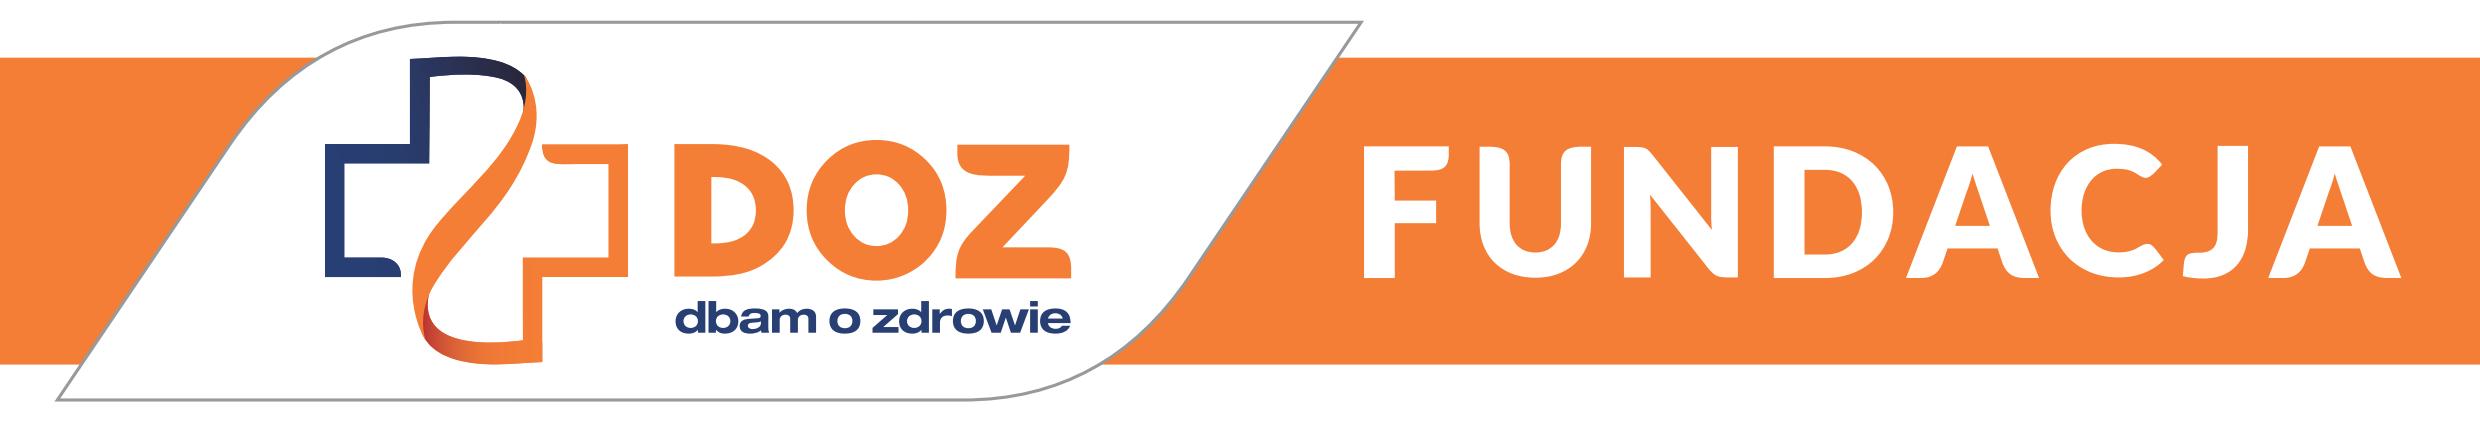 logo FundDOZ